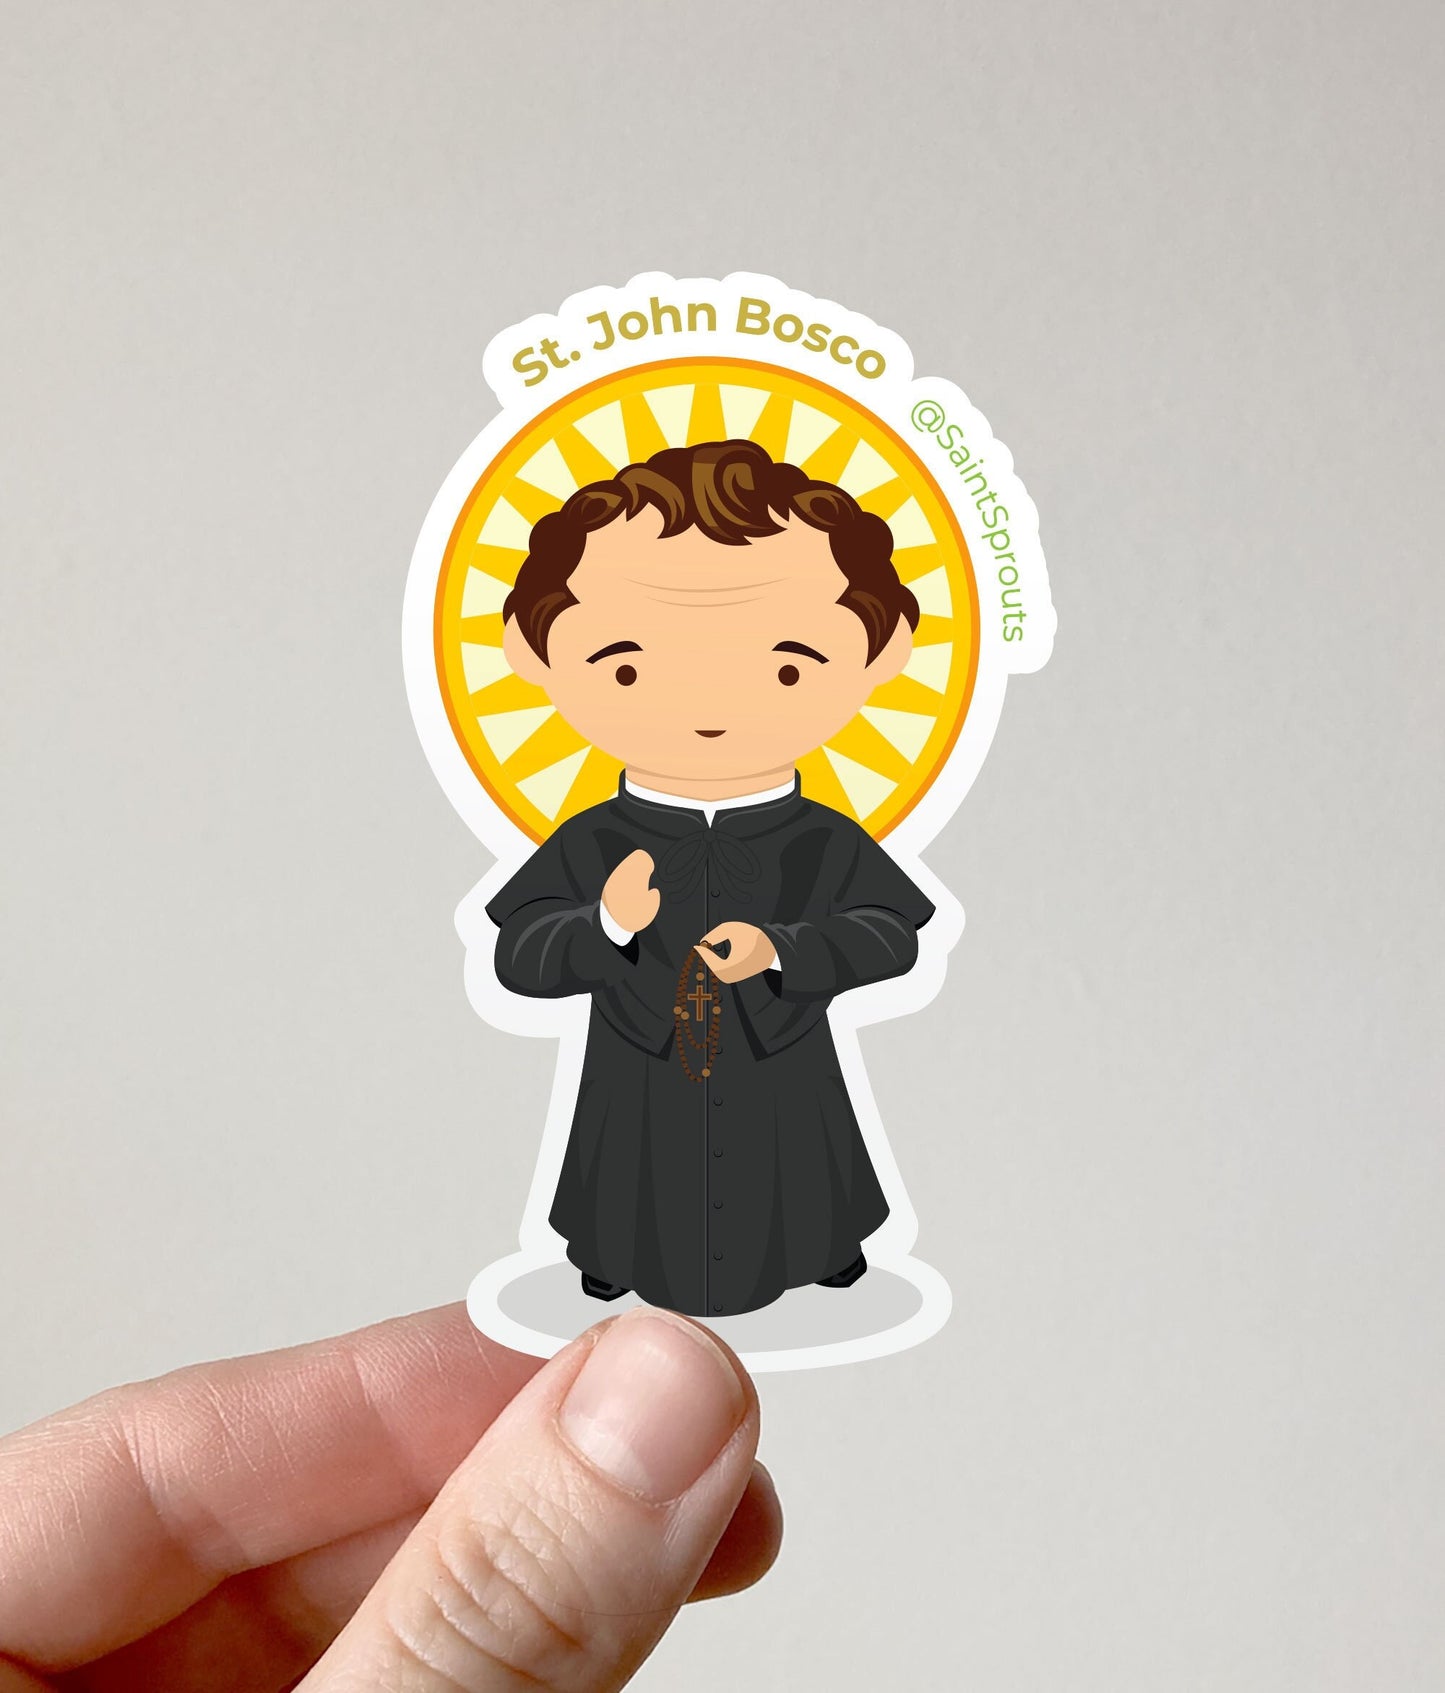 St. John Bosco Sticker